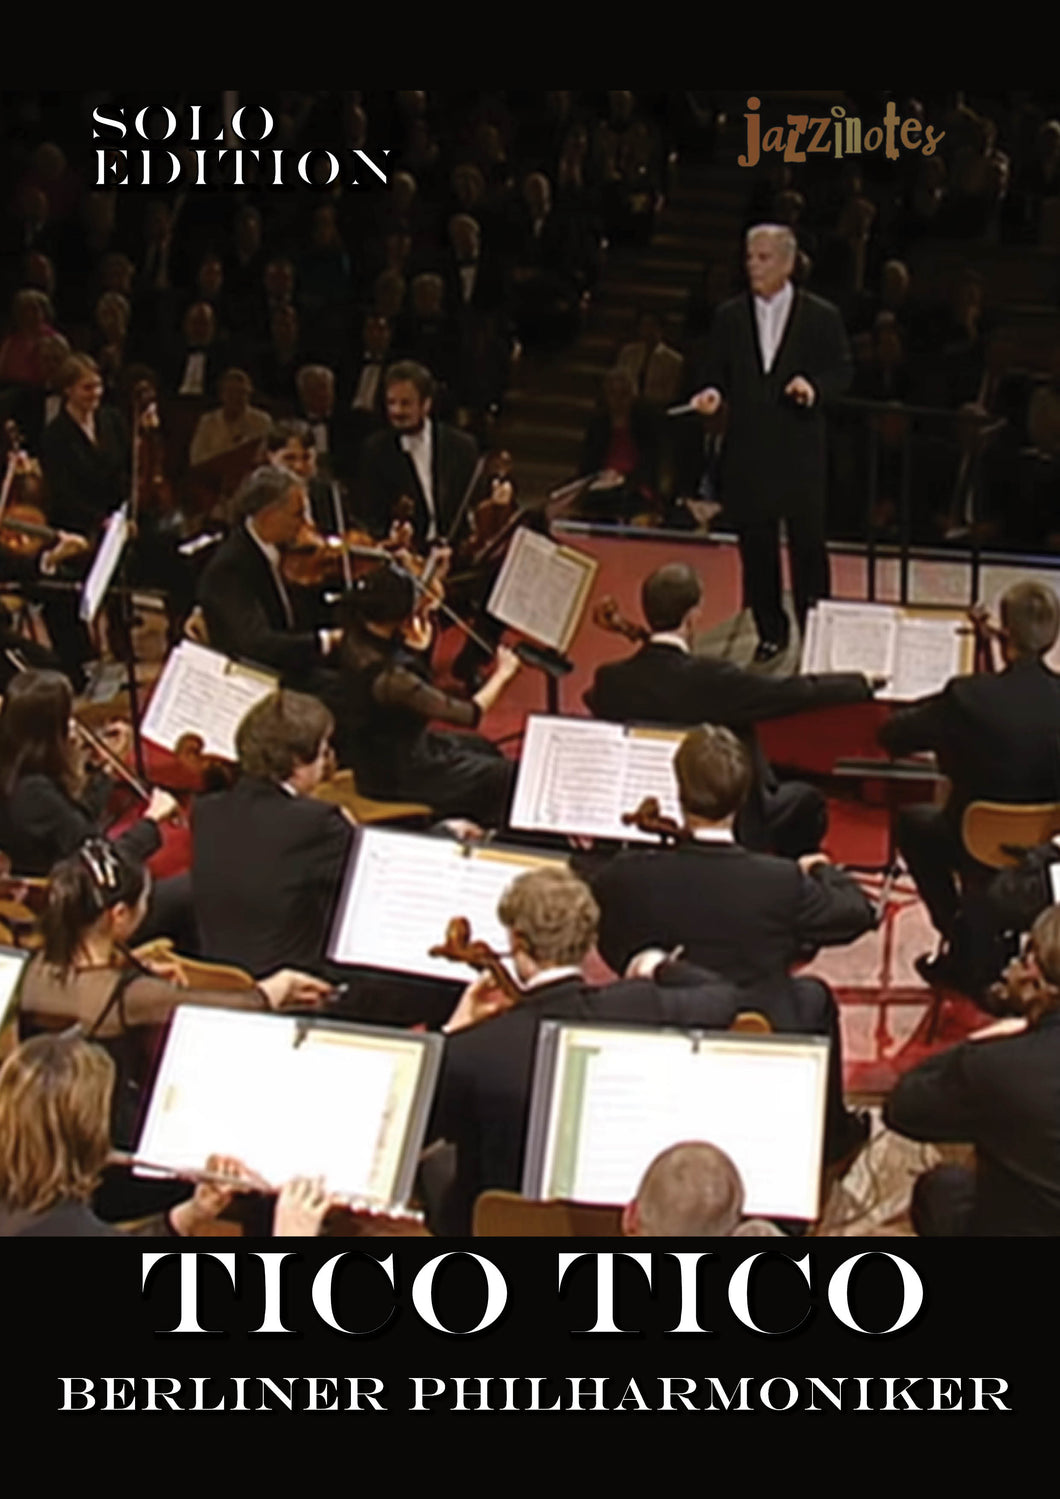 Berlin Philharmonic Orchestra: Tico Tico (No Fubá) - Sheet Music Download